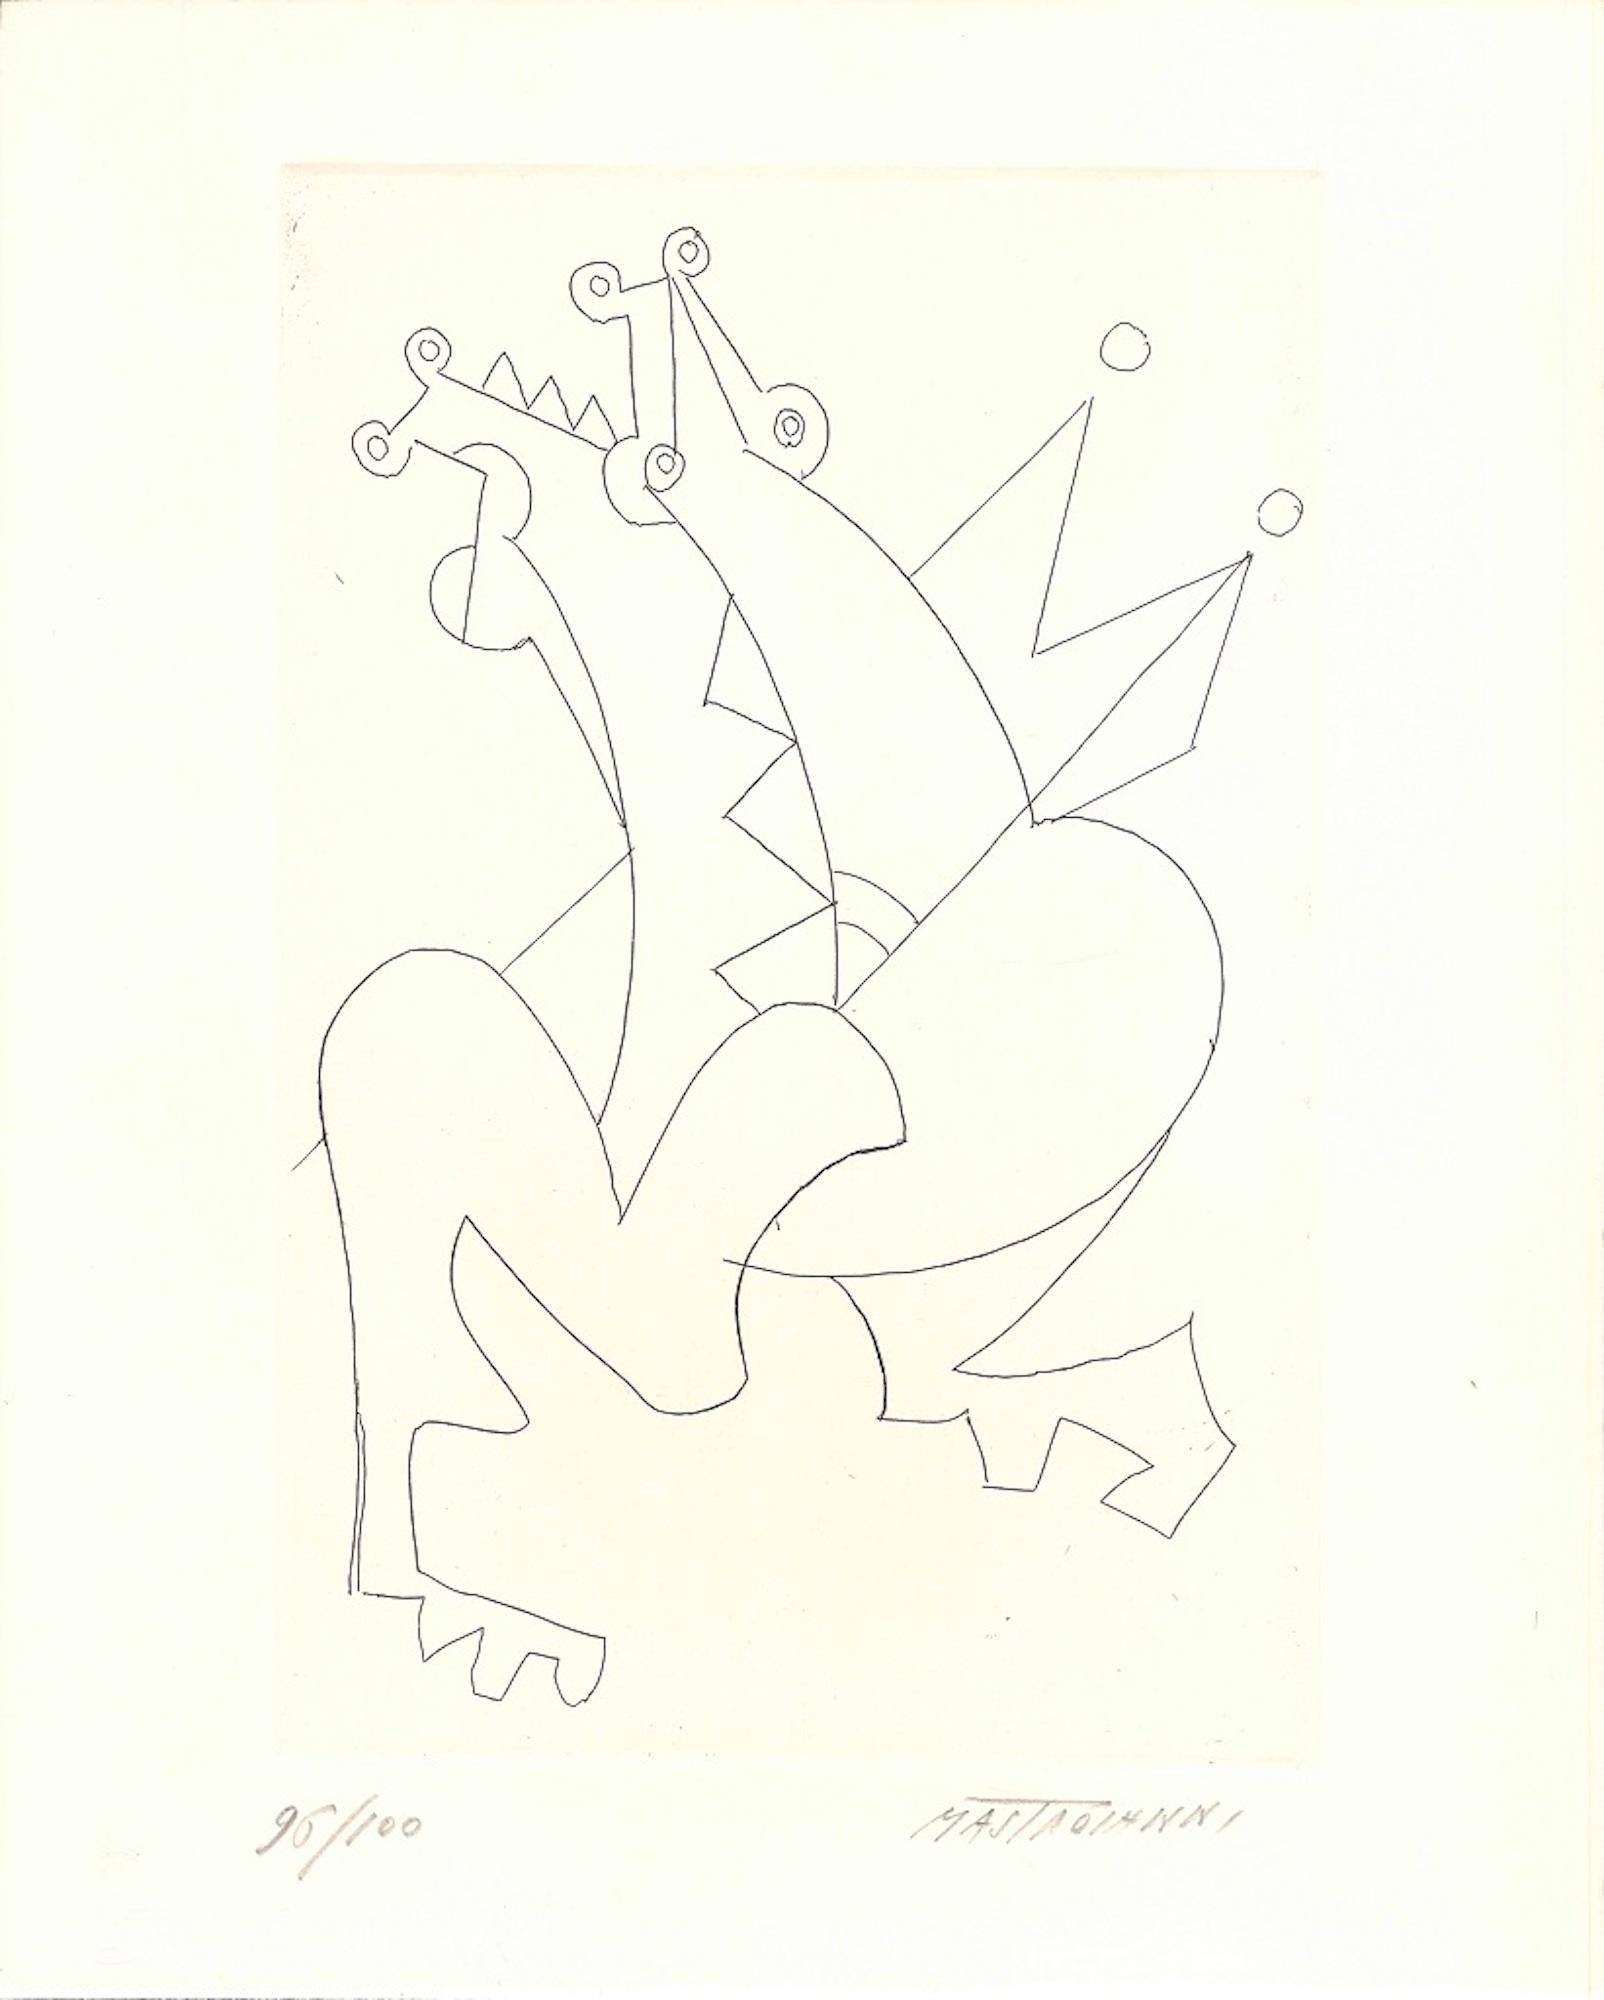 Umberto Mastroianni Animal Print - Horses Composition - Original Etching by U. Mastroianni - 1972